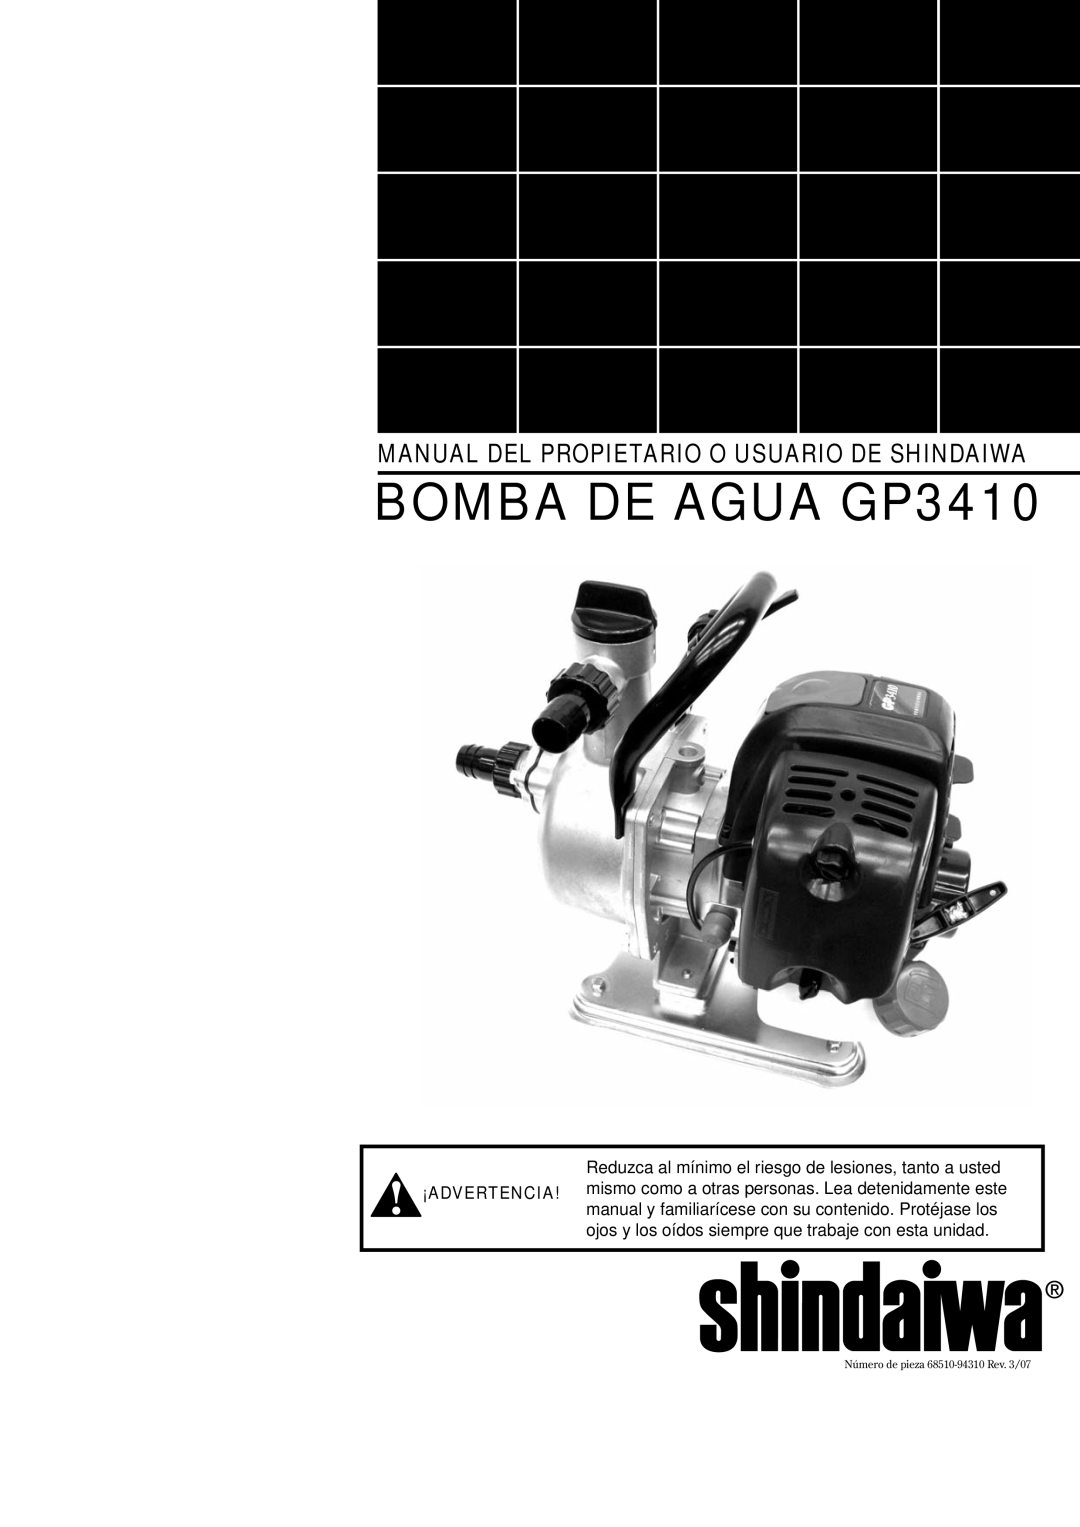 Shindaiwa 6850-9430 manual Bomba de agua GP3410, Manual Del Propietario O Usuario De Shindaiwa 